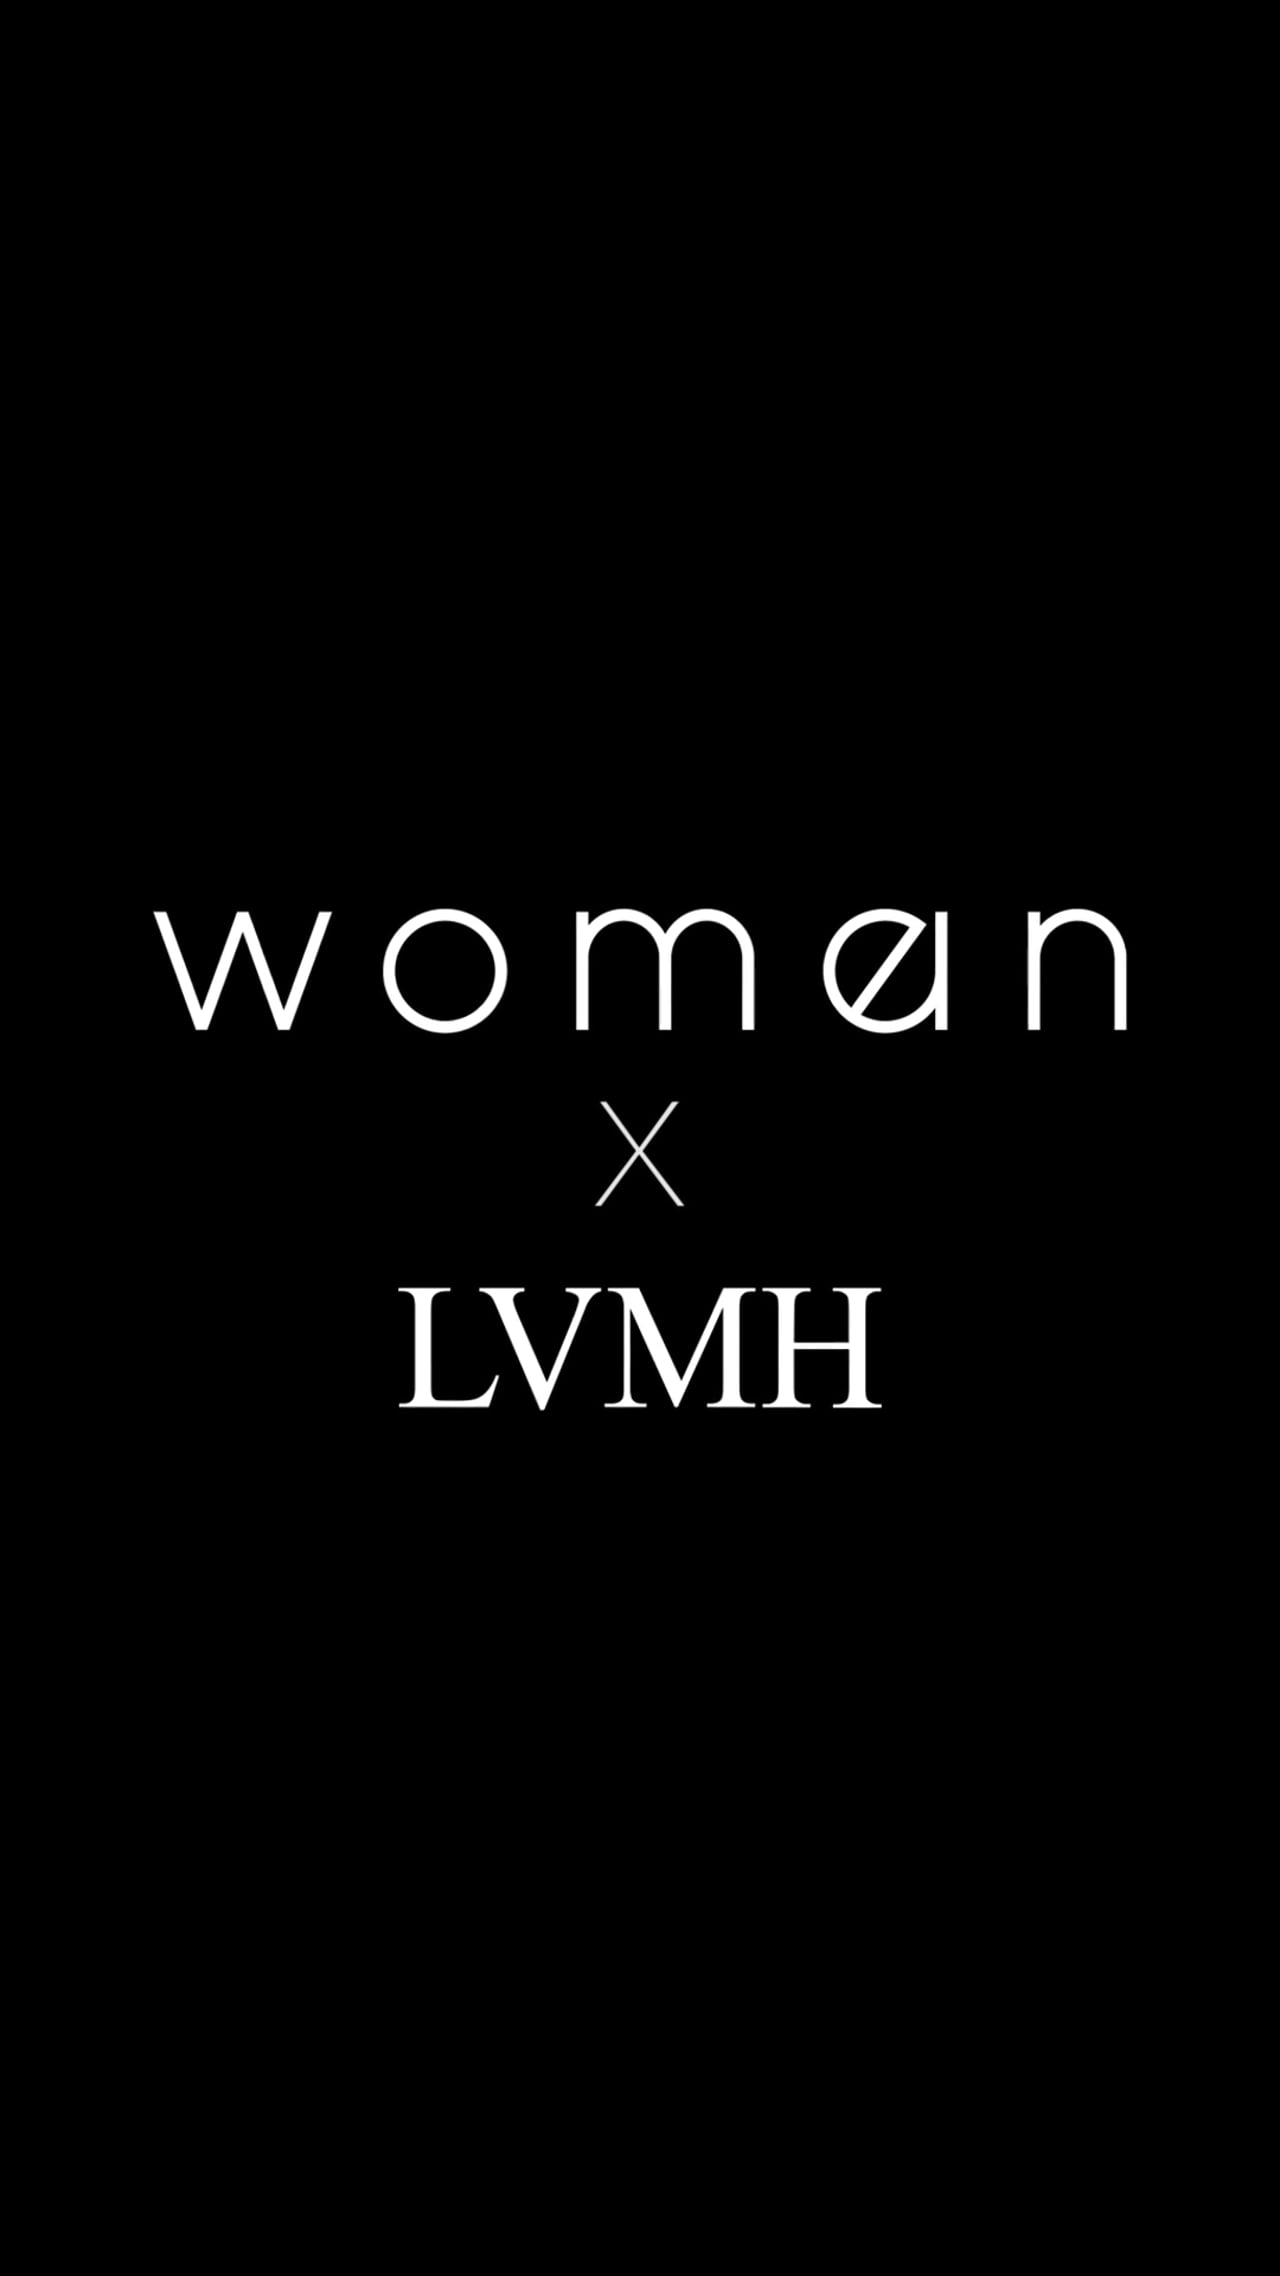 LVMH WOMAN EPISODE 1 MASTER 9-16